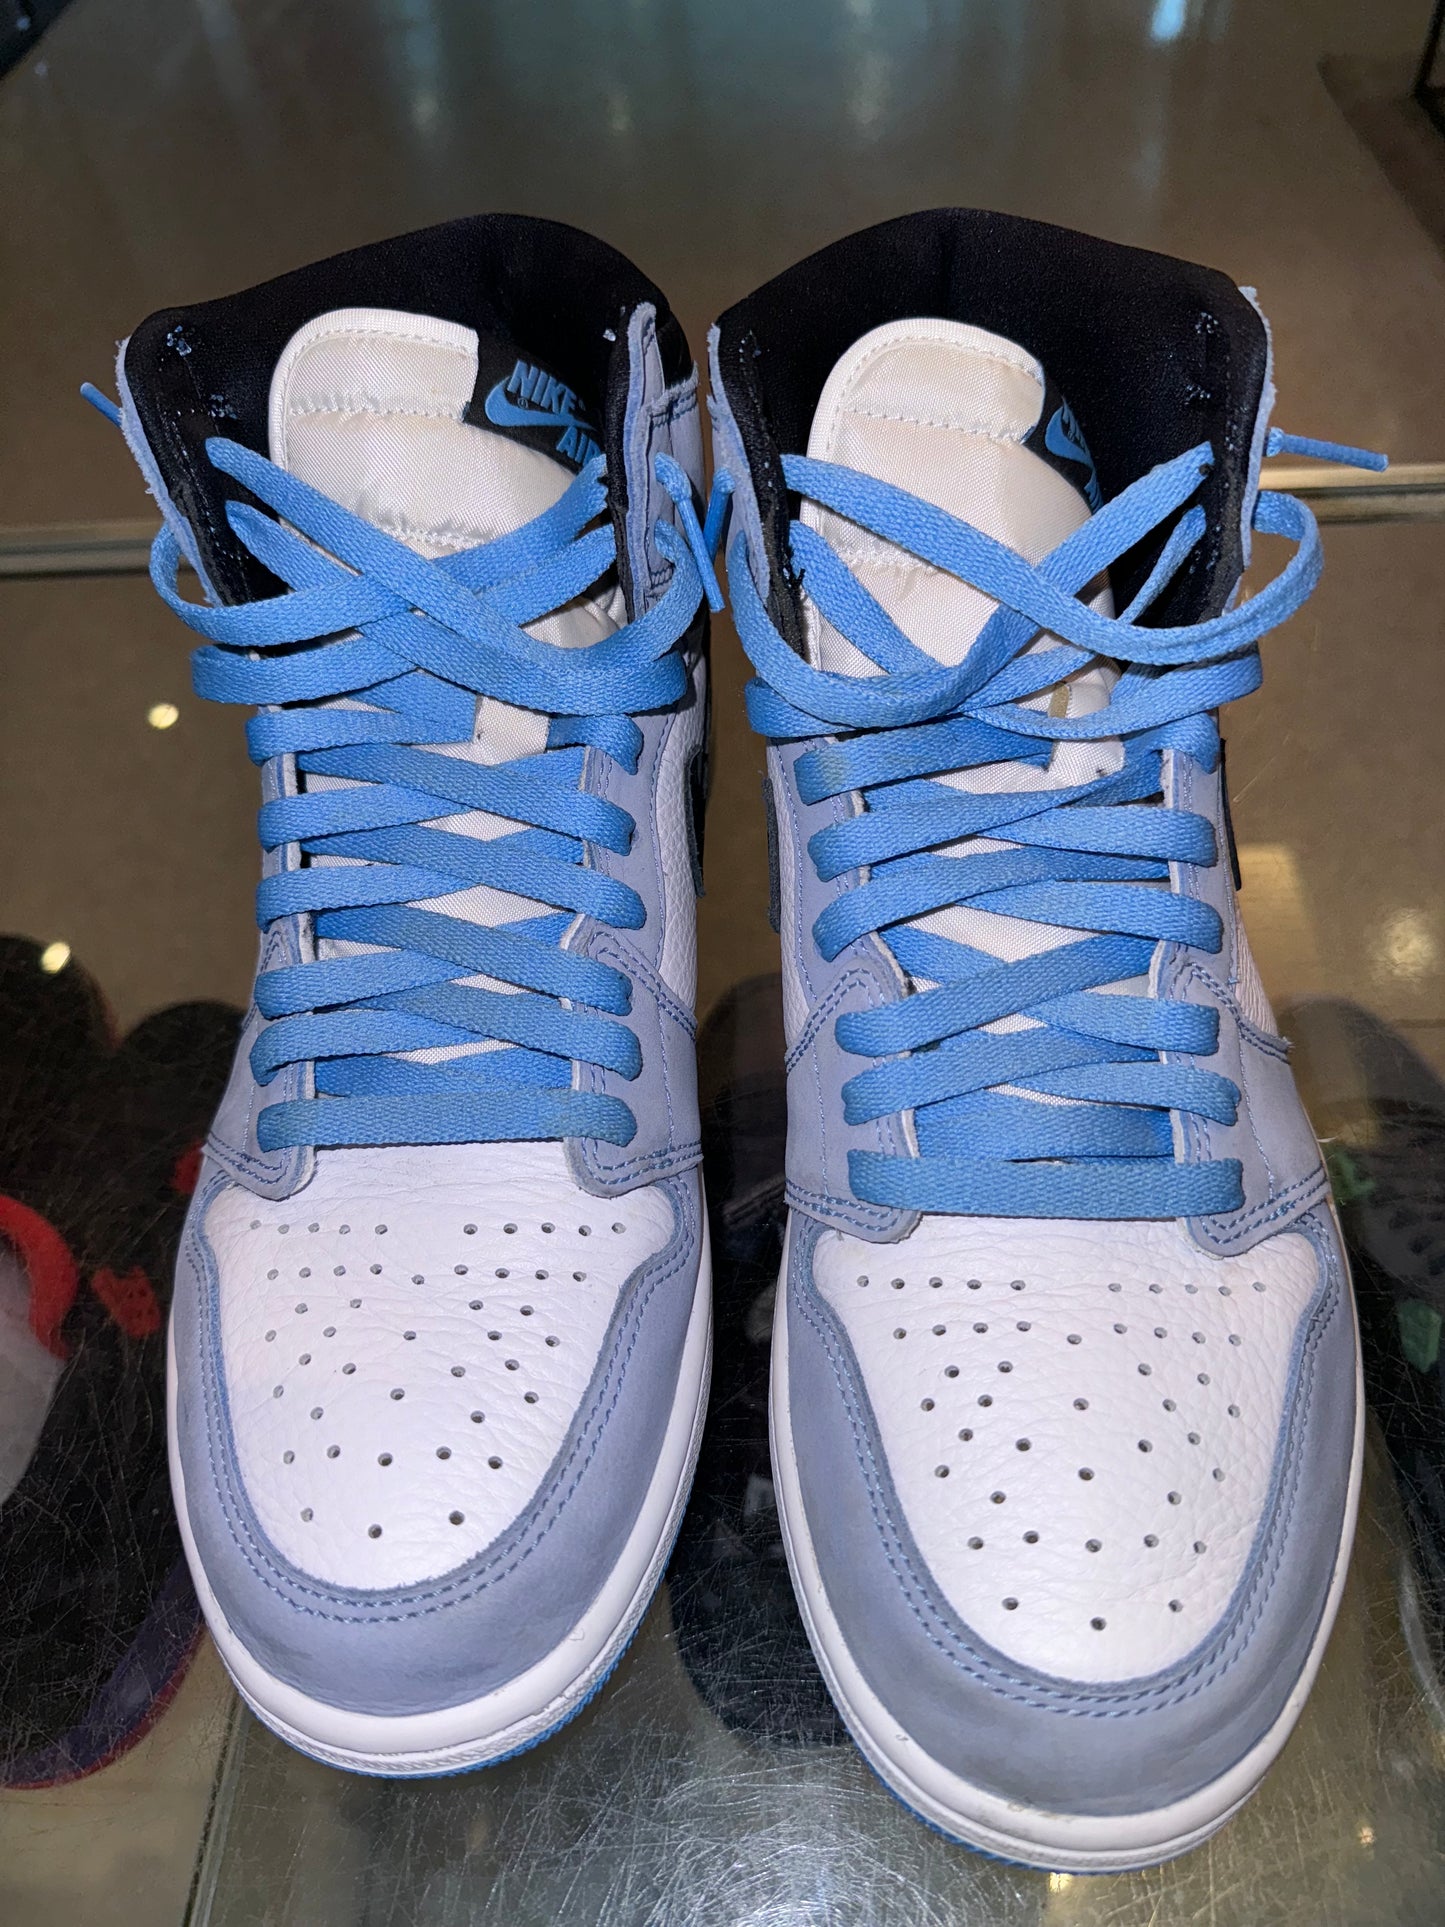 Size 10.5 Air Jordan 1 “University Blue” (Mall)